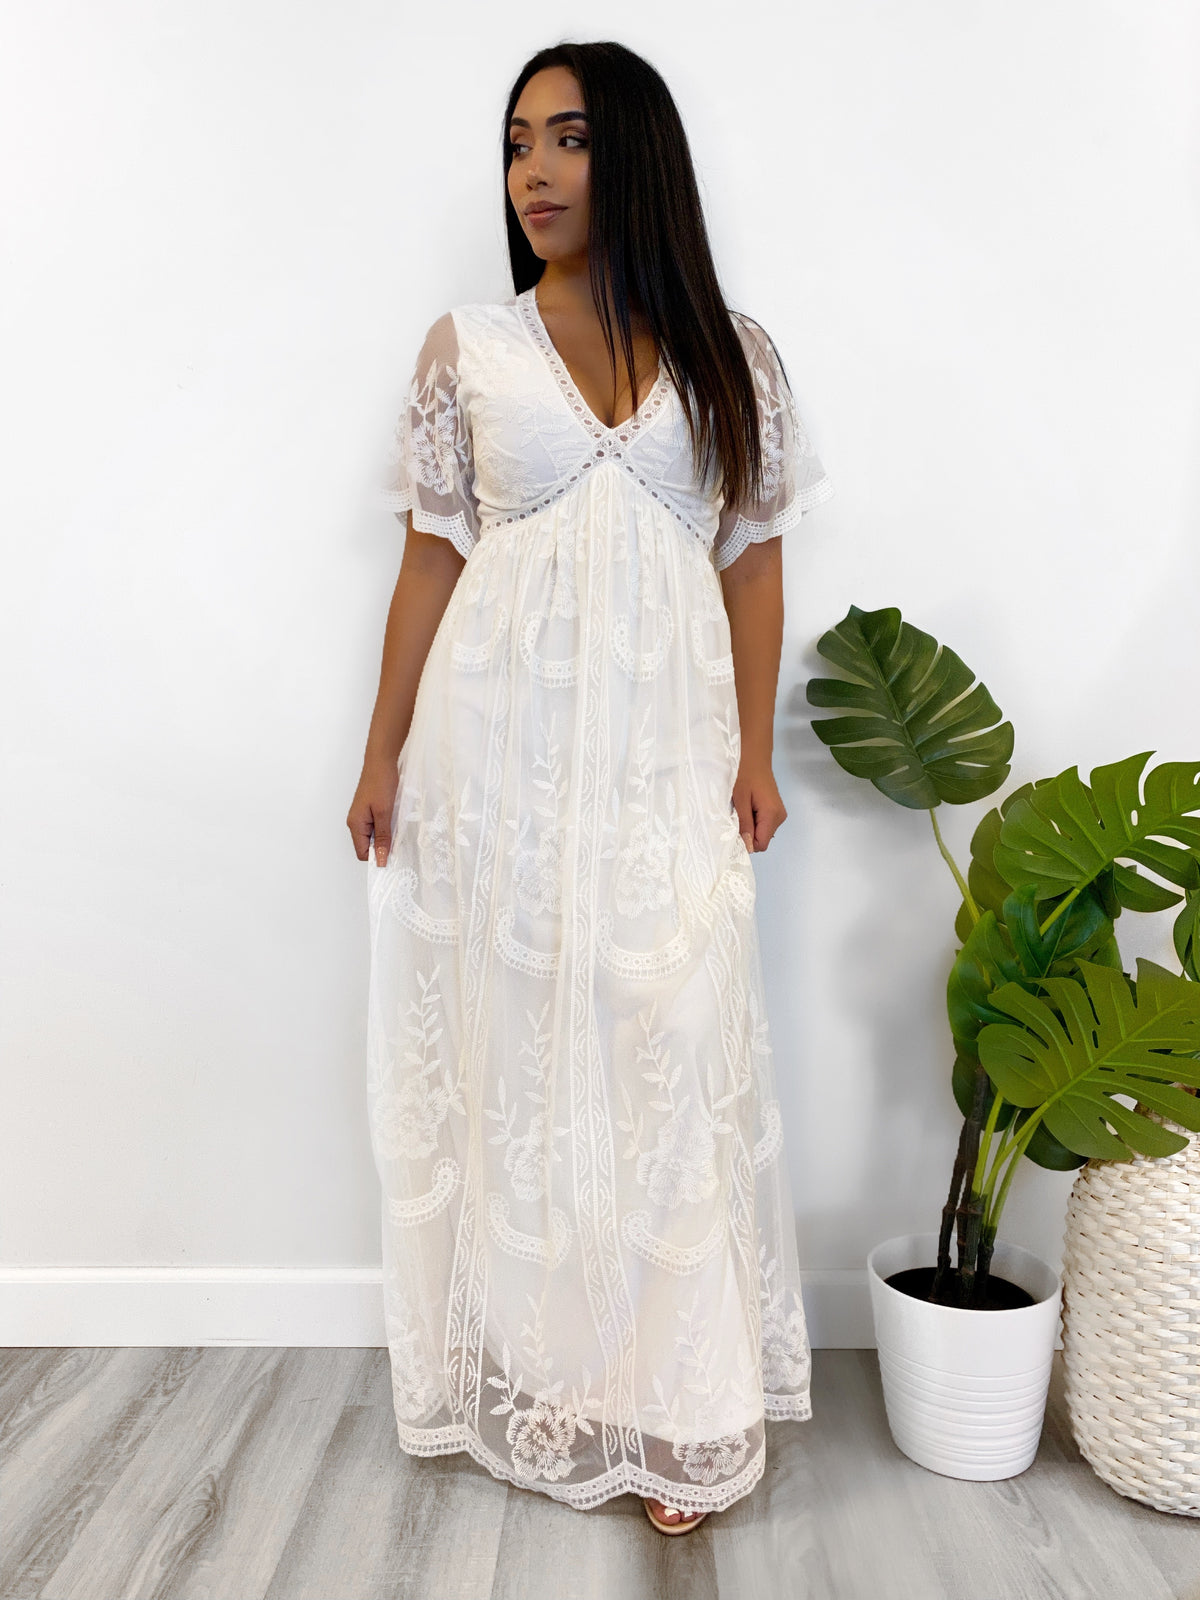 double layered white dress